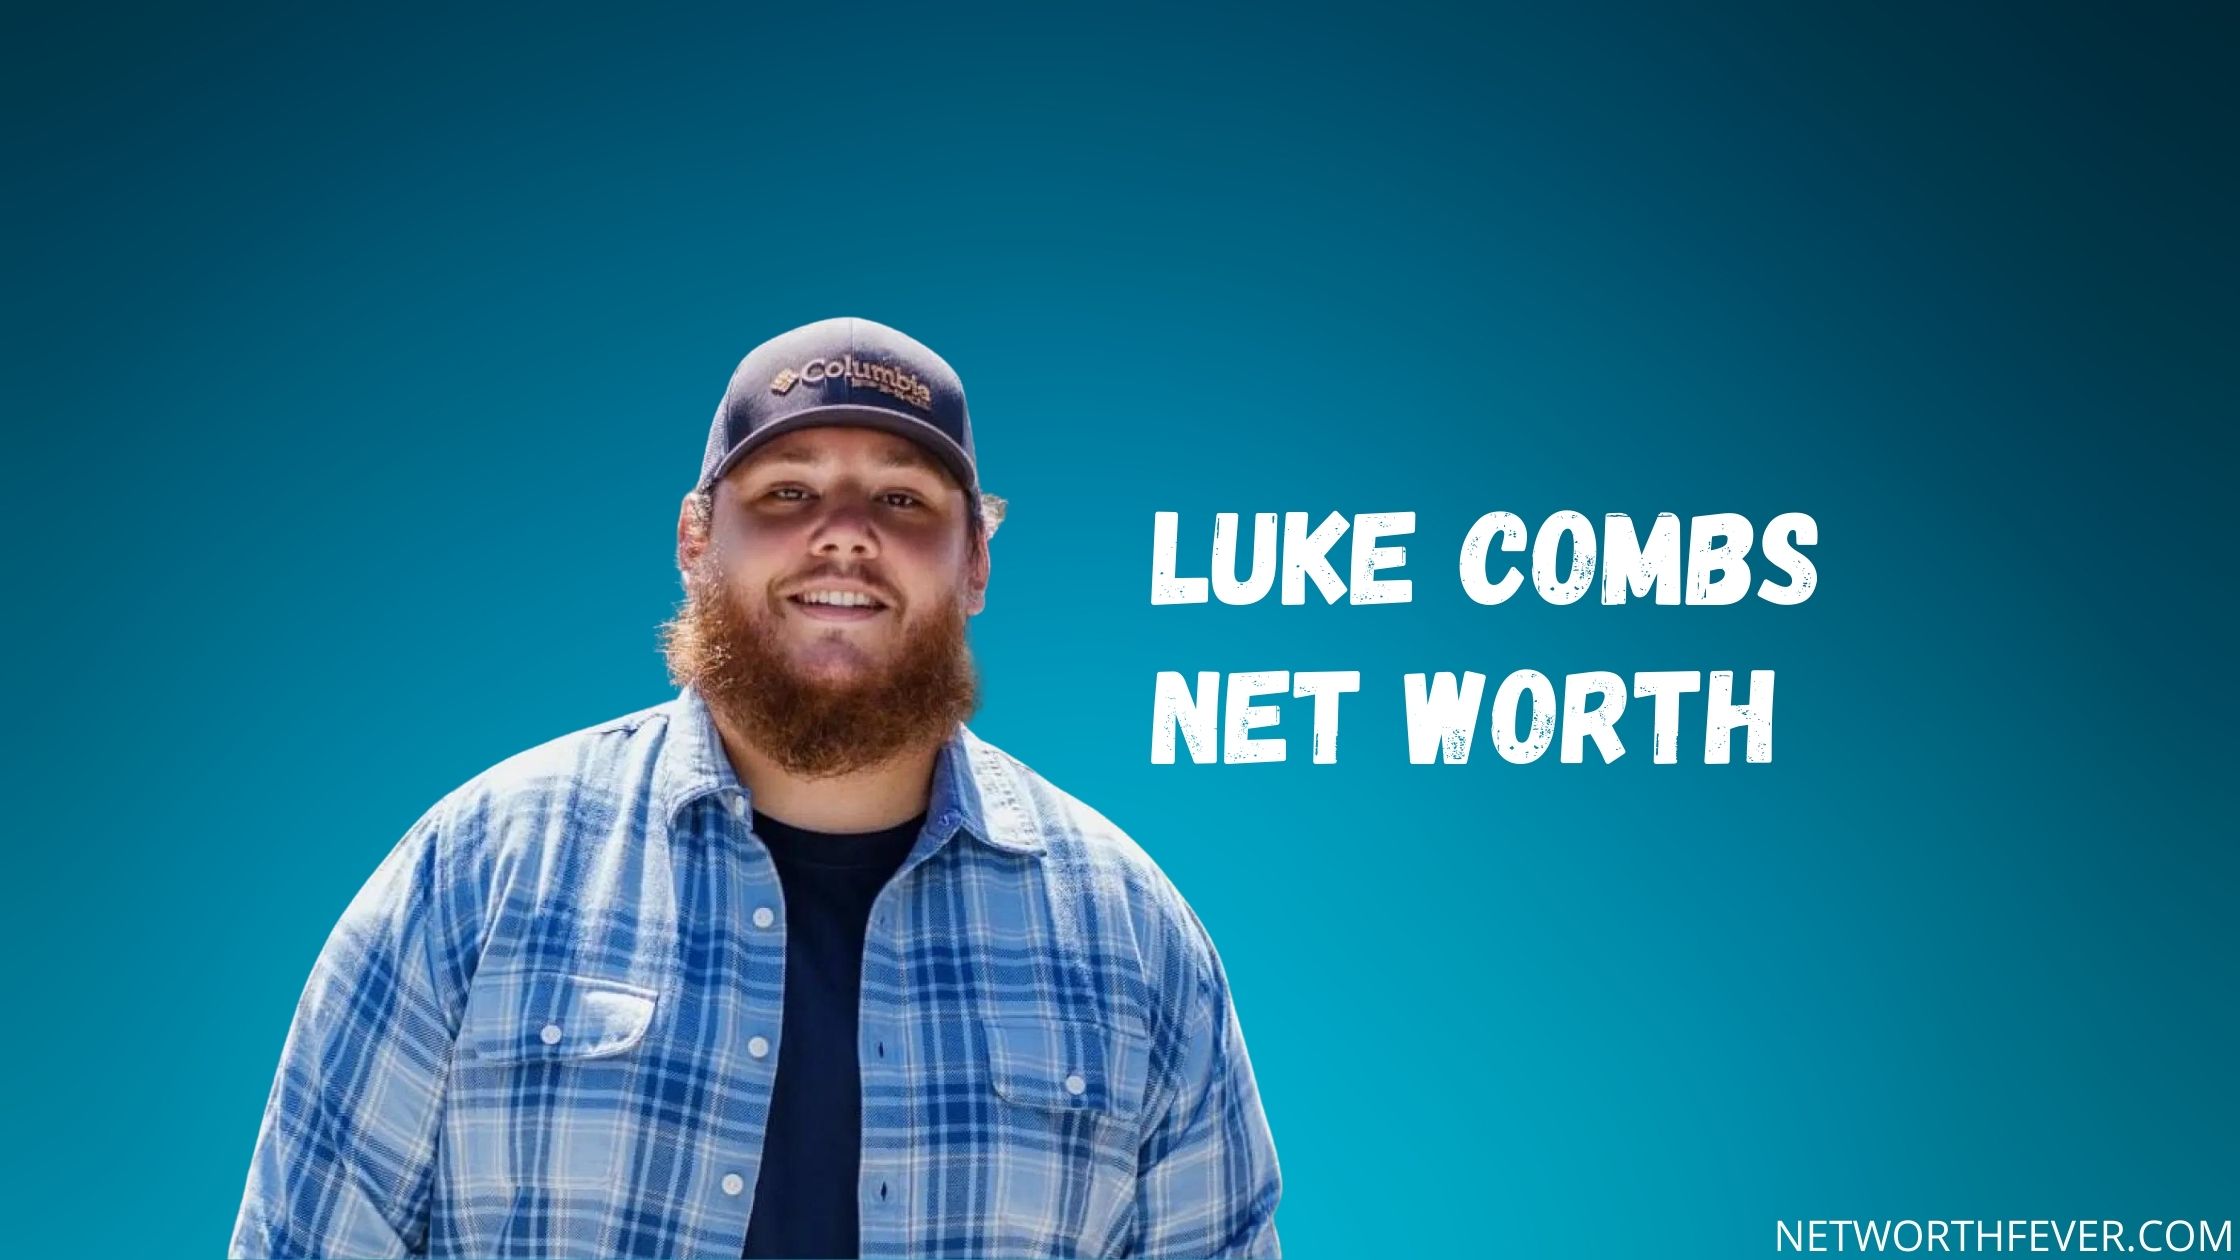 Luke Combs Net Worth